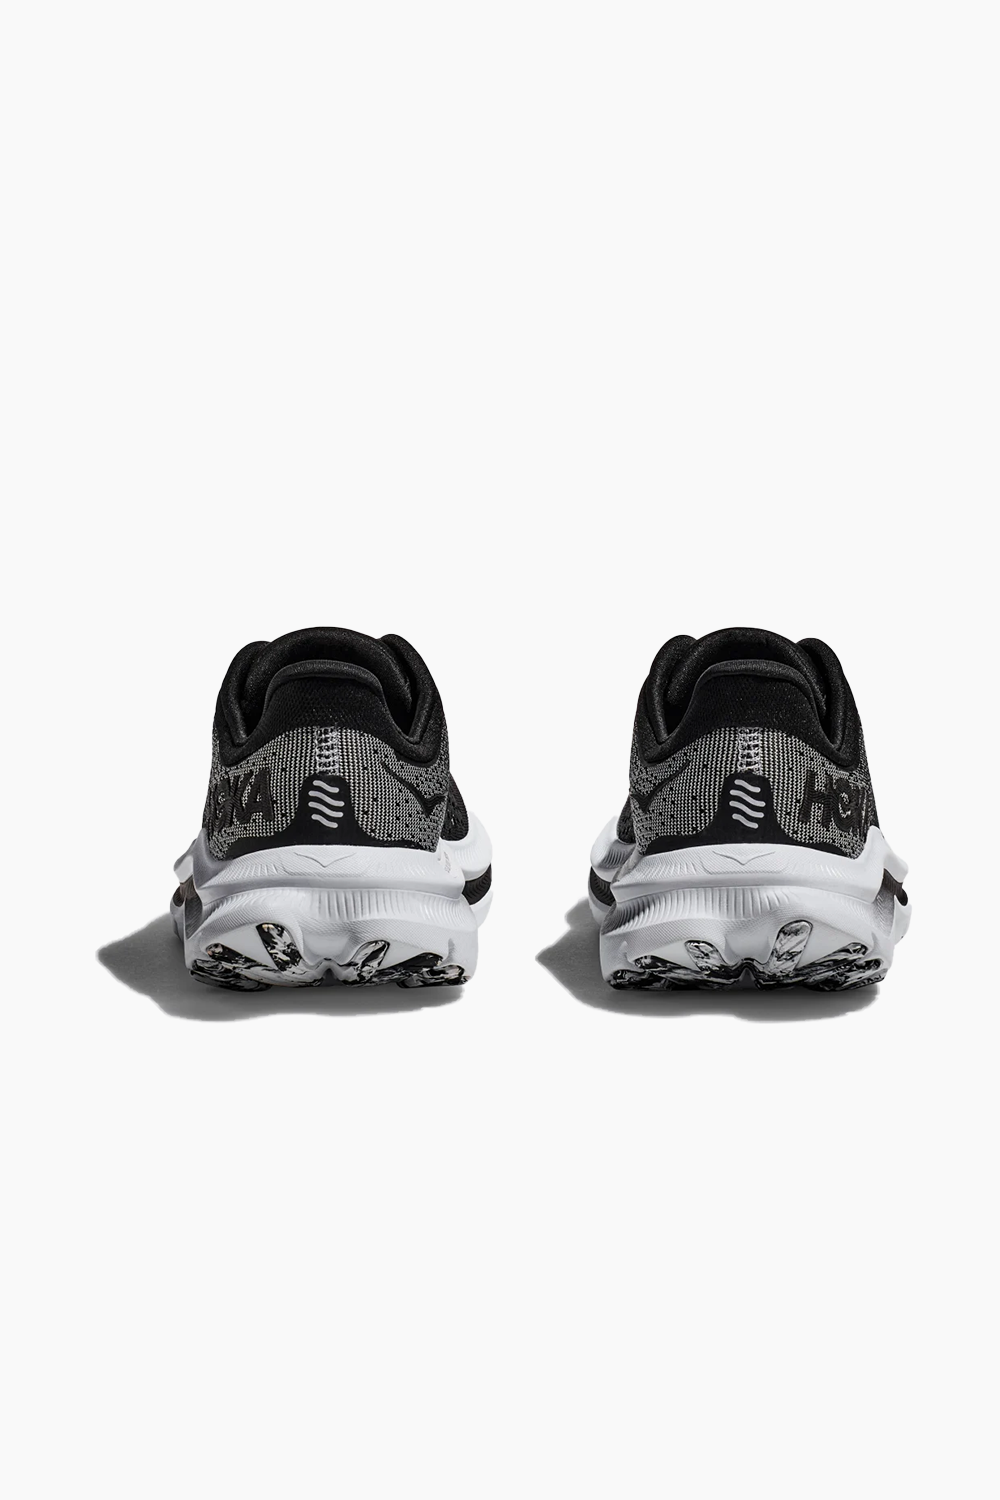 Hoka Men's Kawana Running Shoes in Black/White